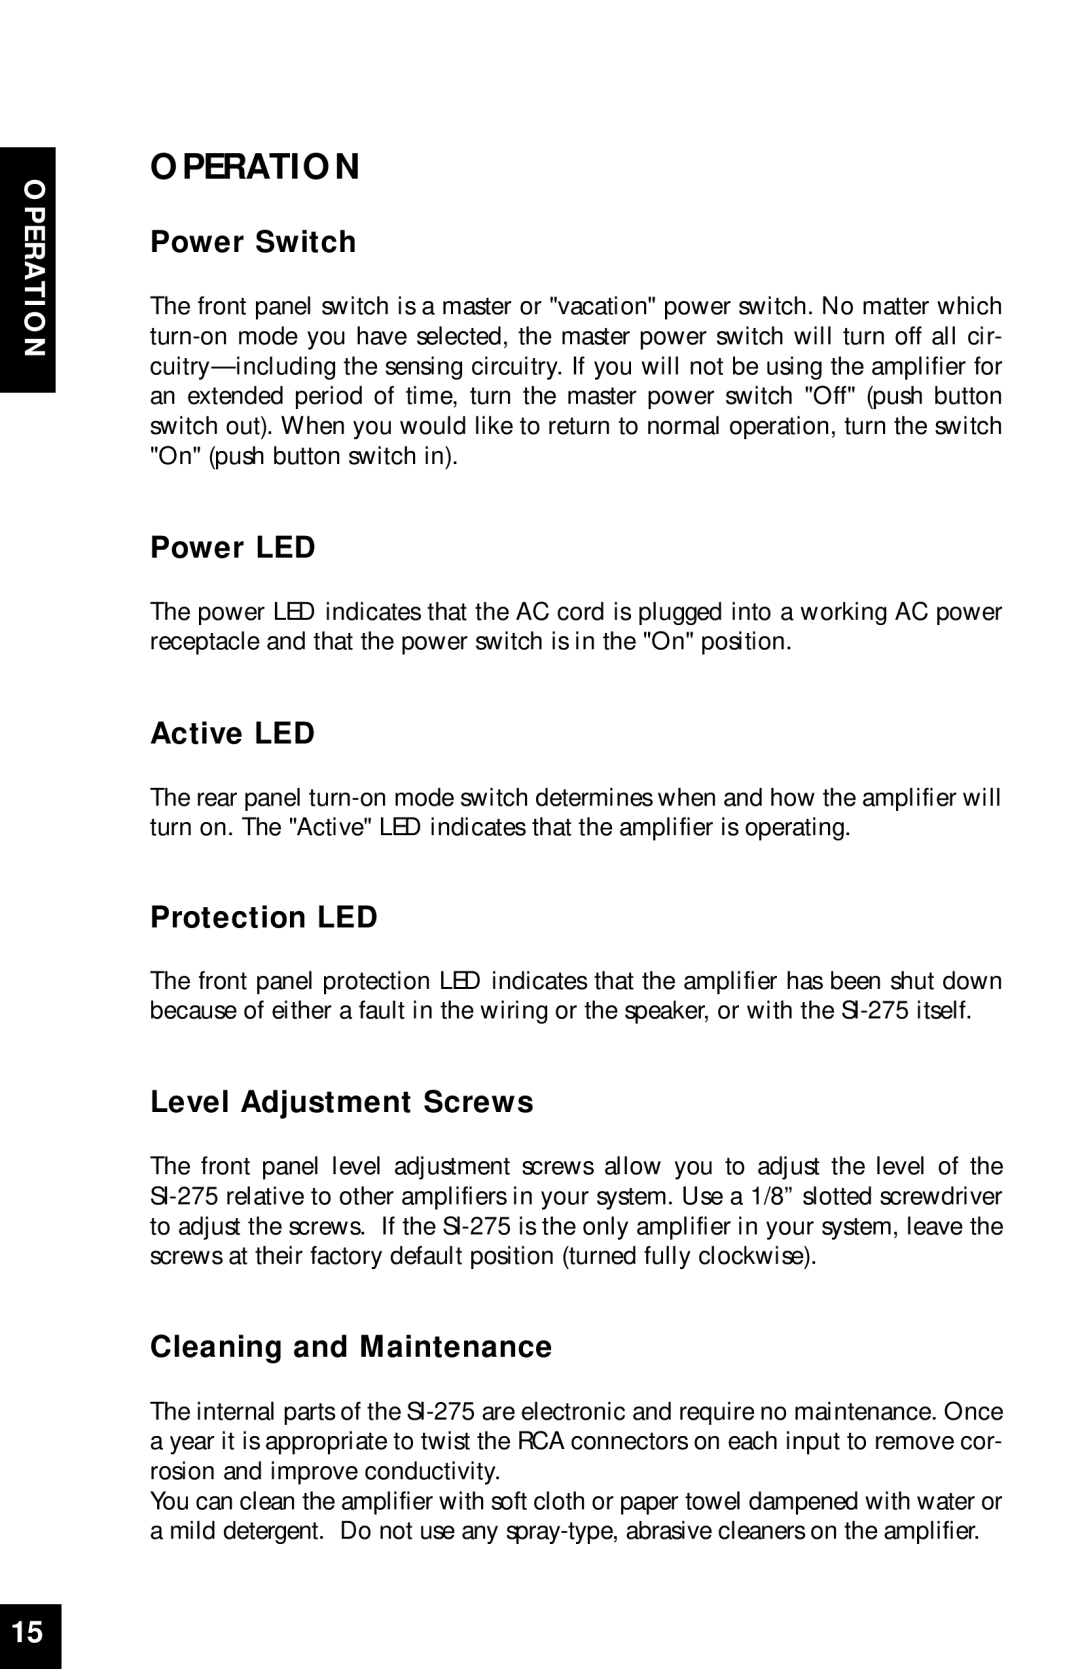 Niles Audio SI-275 manual Operation, Power Switch, Power LED, Active LED, Protection LED, Level Adjustment Screws 